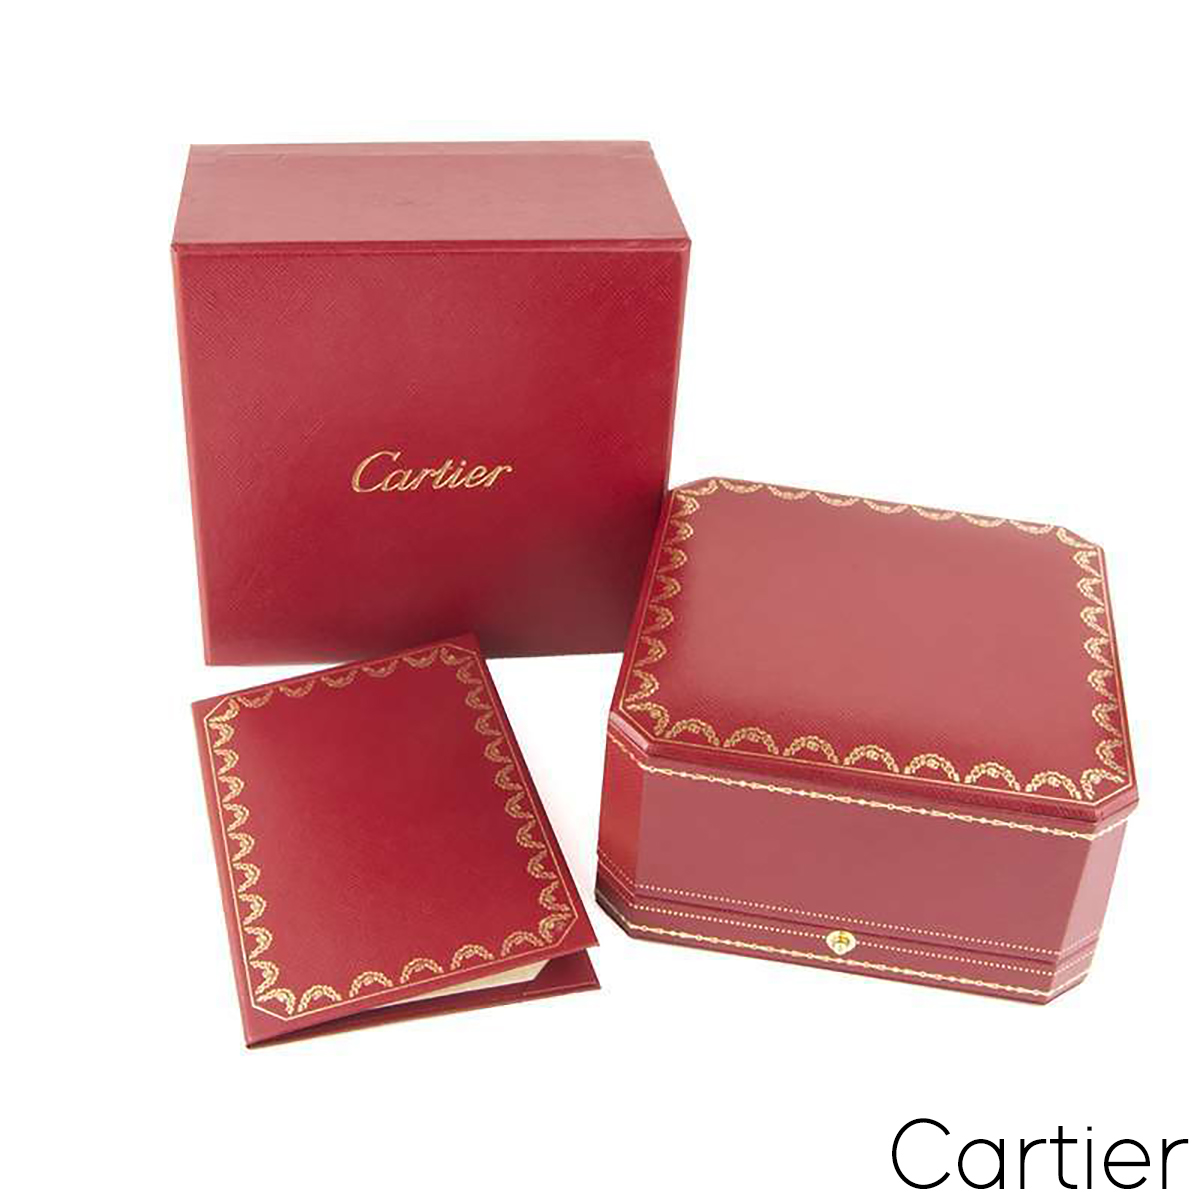 Cartier White Gold Plain Love Cuff Bracelet Size 17 B6032517